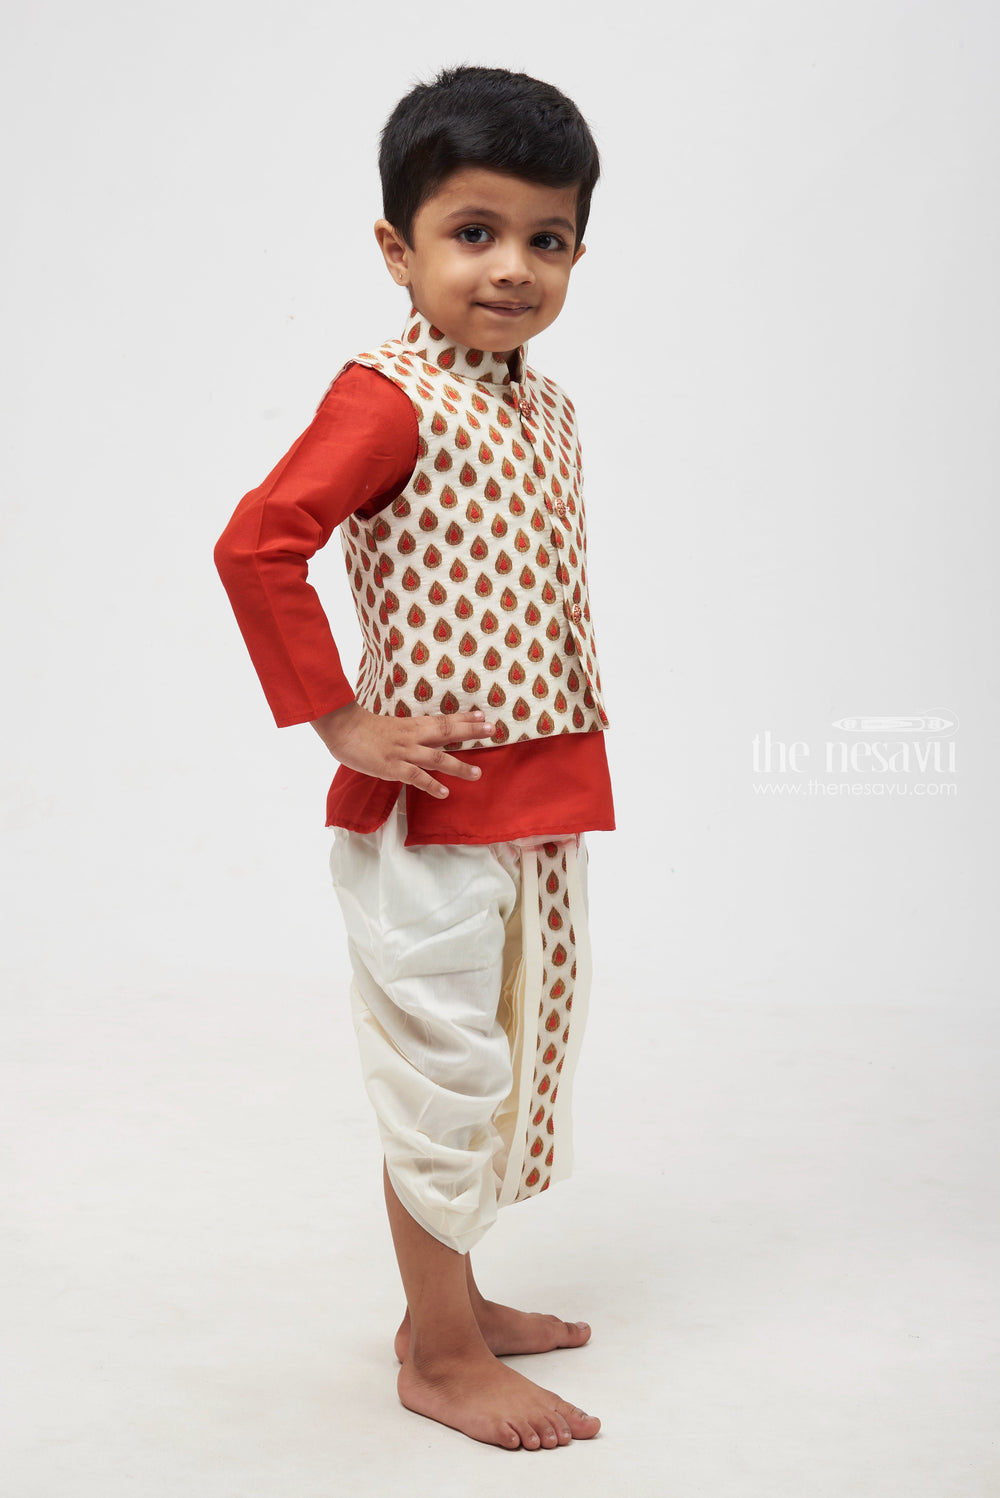 The Nesavu Boys Jacket Sets Ruby Radiance: Butta Designer Overcoat & Regal Red Kurta with Classic Panchagajam for Boys Nesavu Boys Festive Wear | Stylish Kids Ethnic Kurta with Panchagajam | The Nesavu